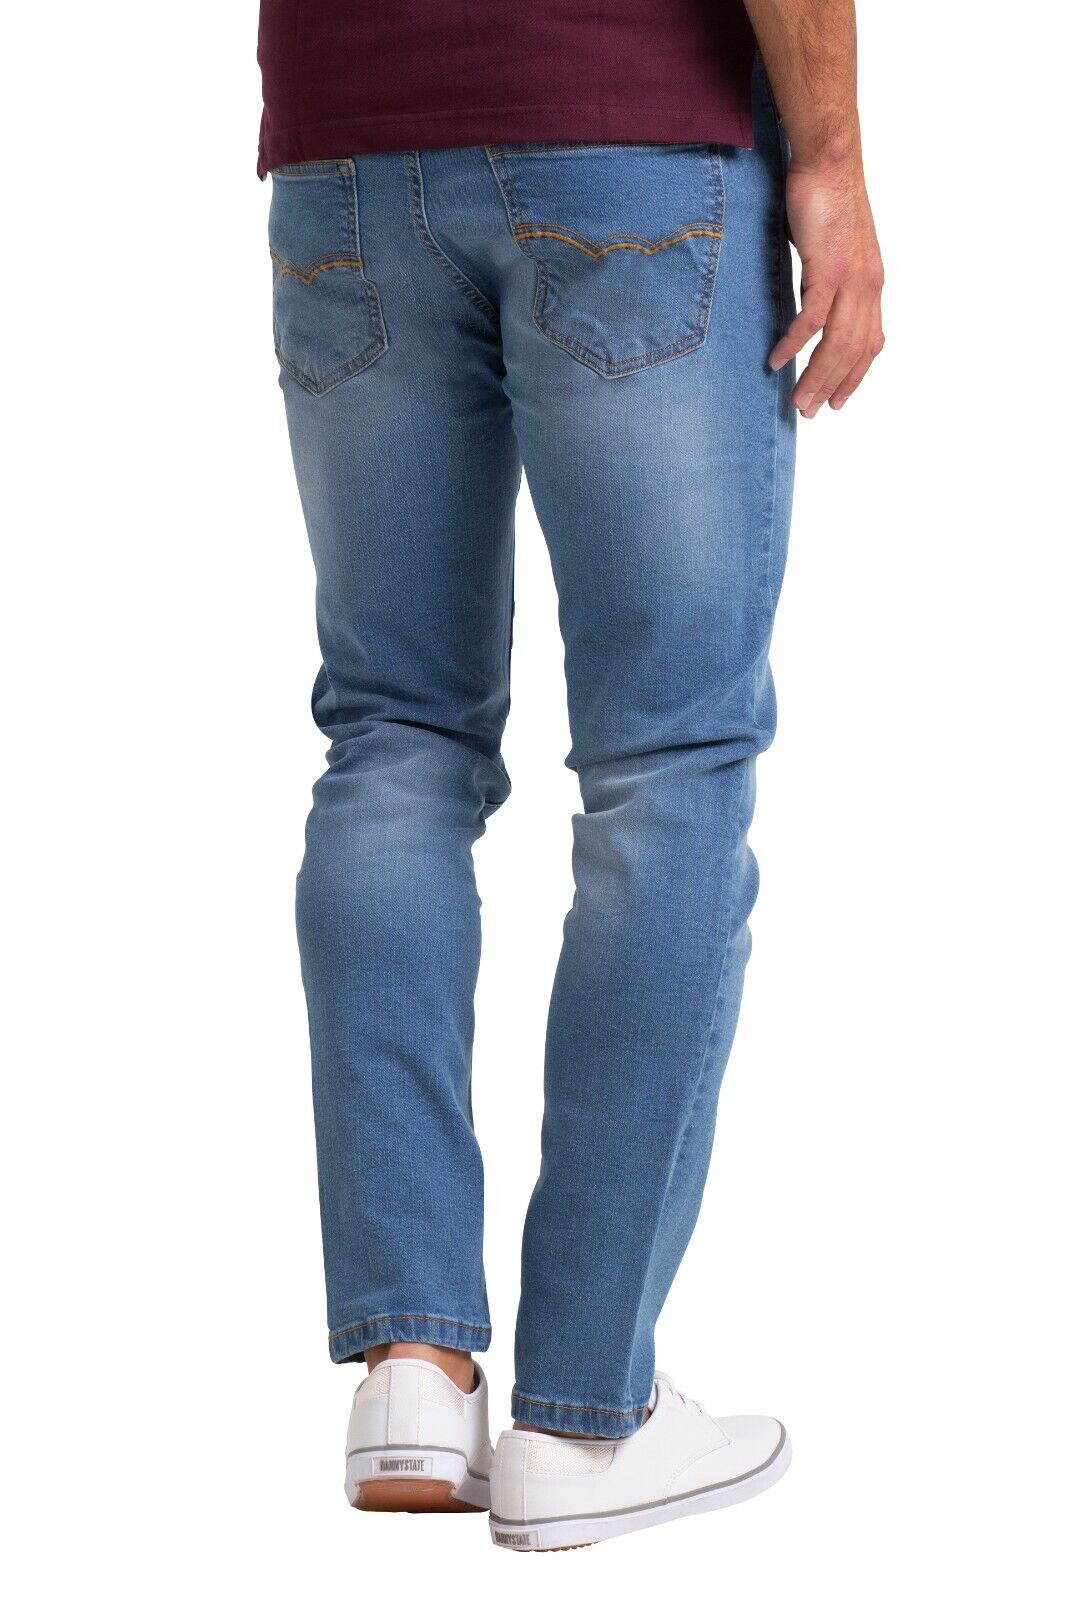 westAce Mens Slim Fit Jeans Stretch Cotton Skinny Denim Pants | eBay